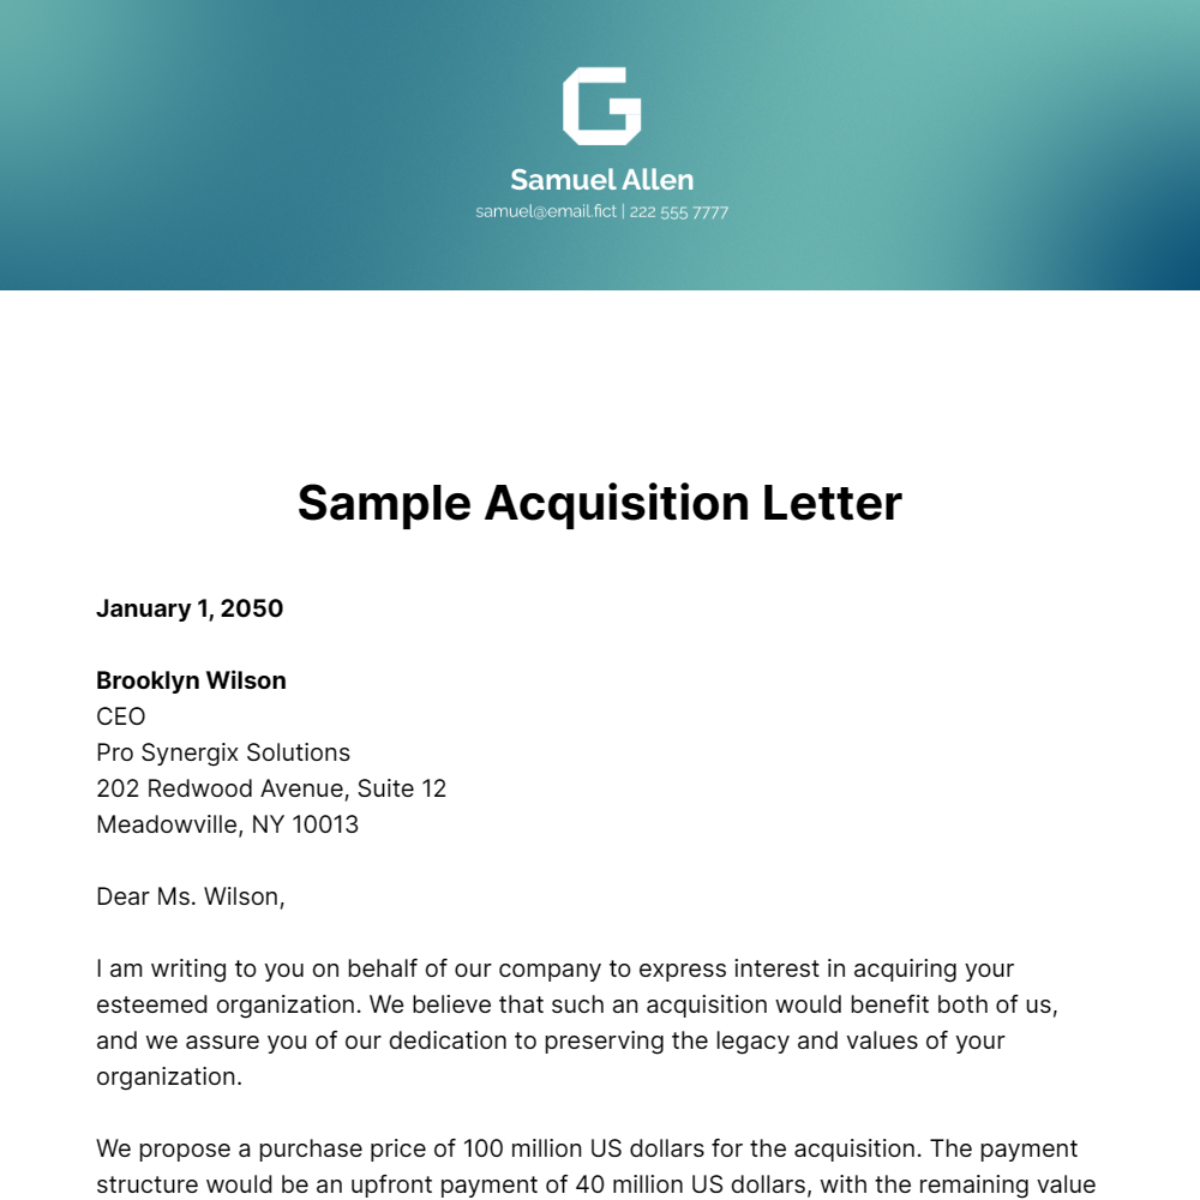 Sample Acquisition Letter Template